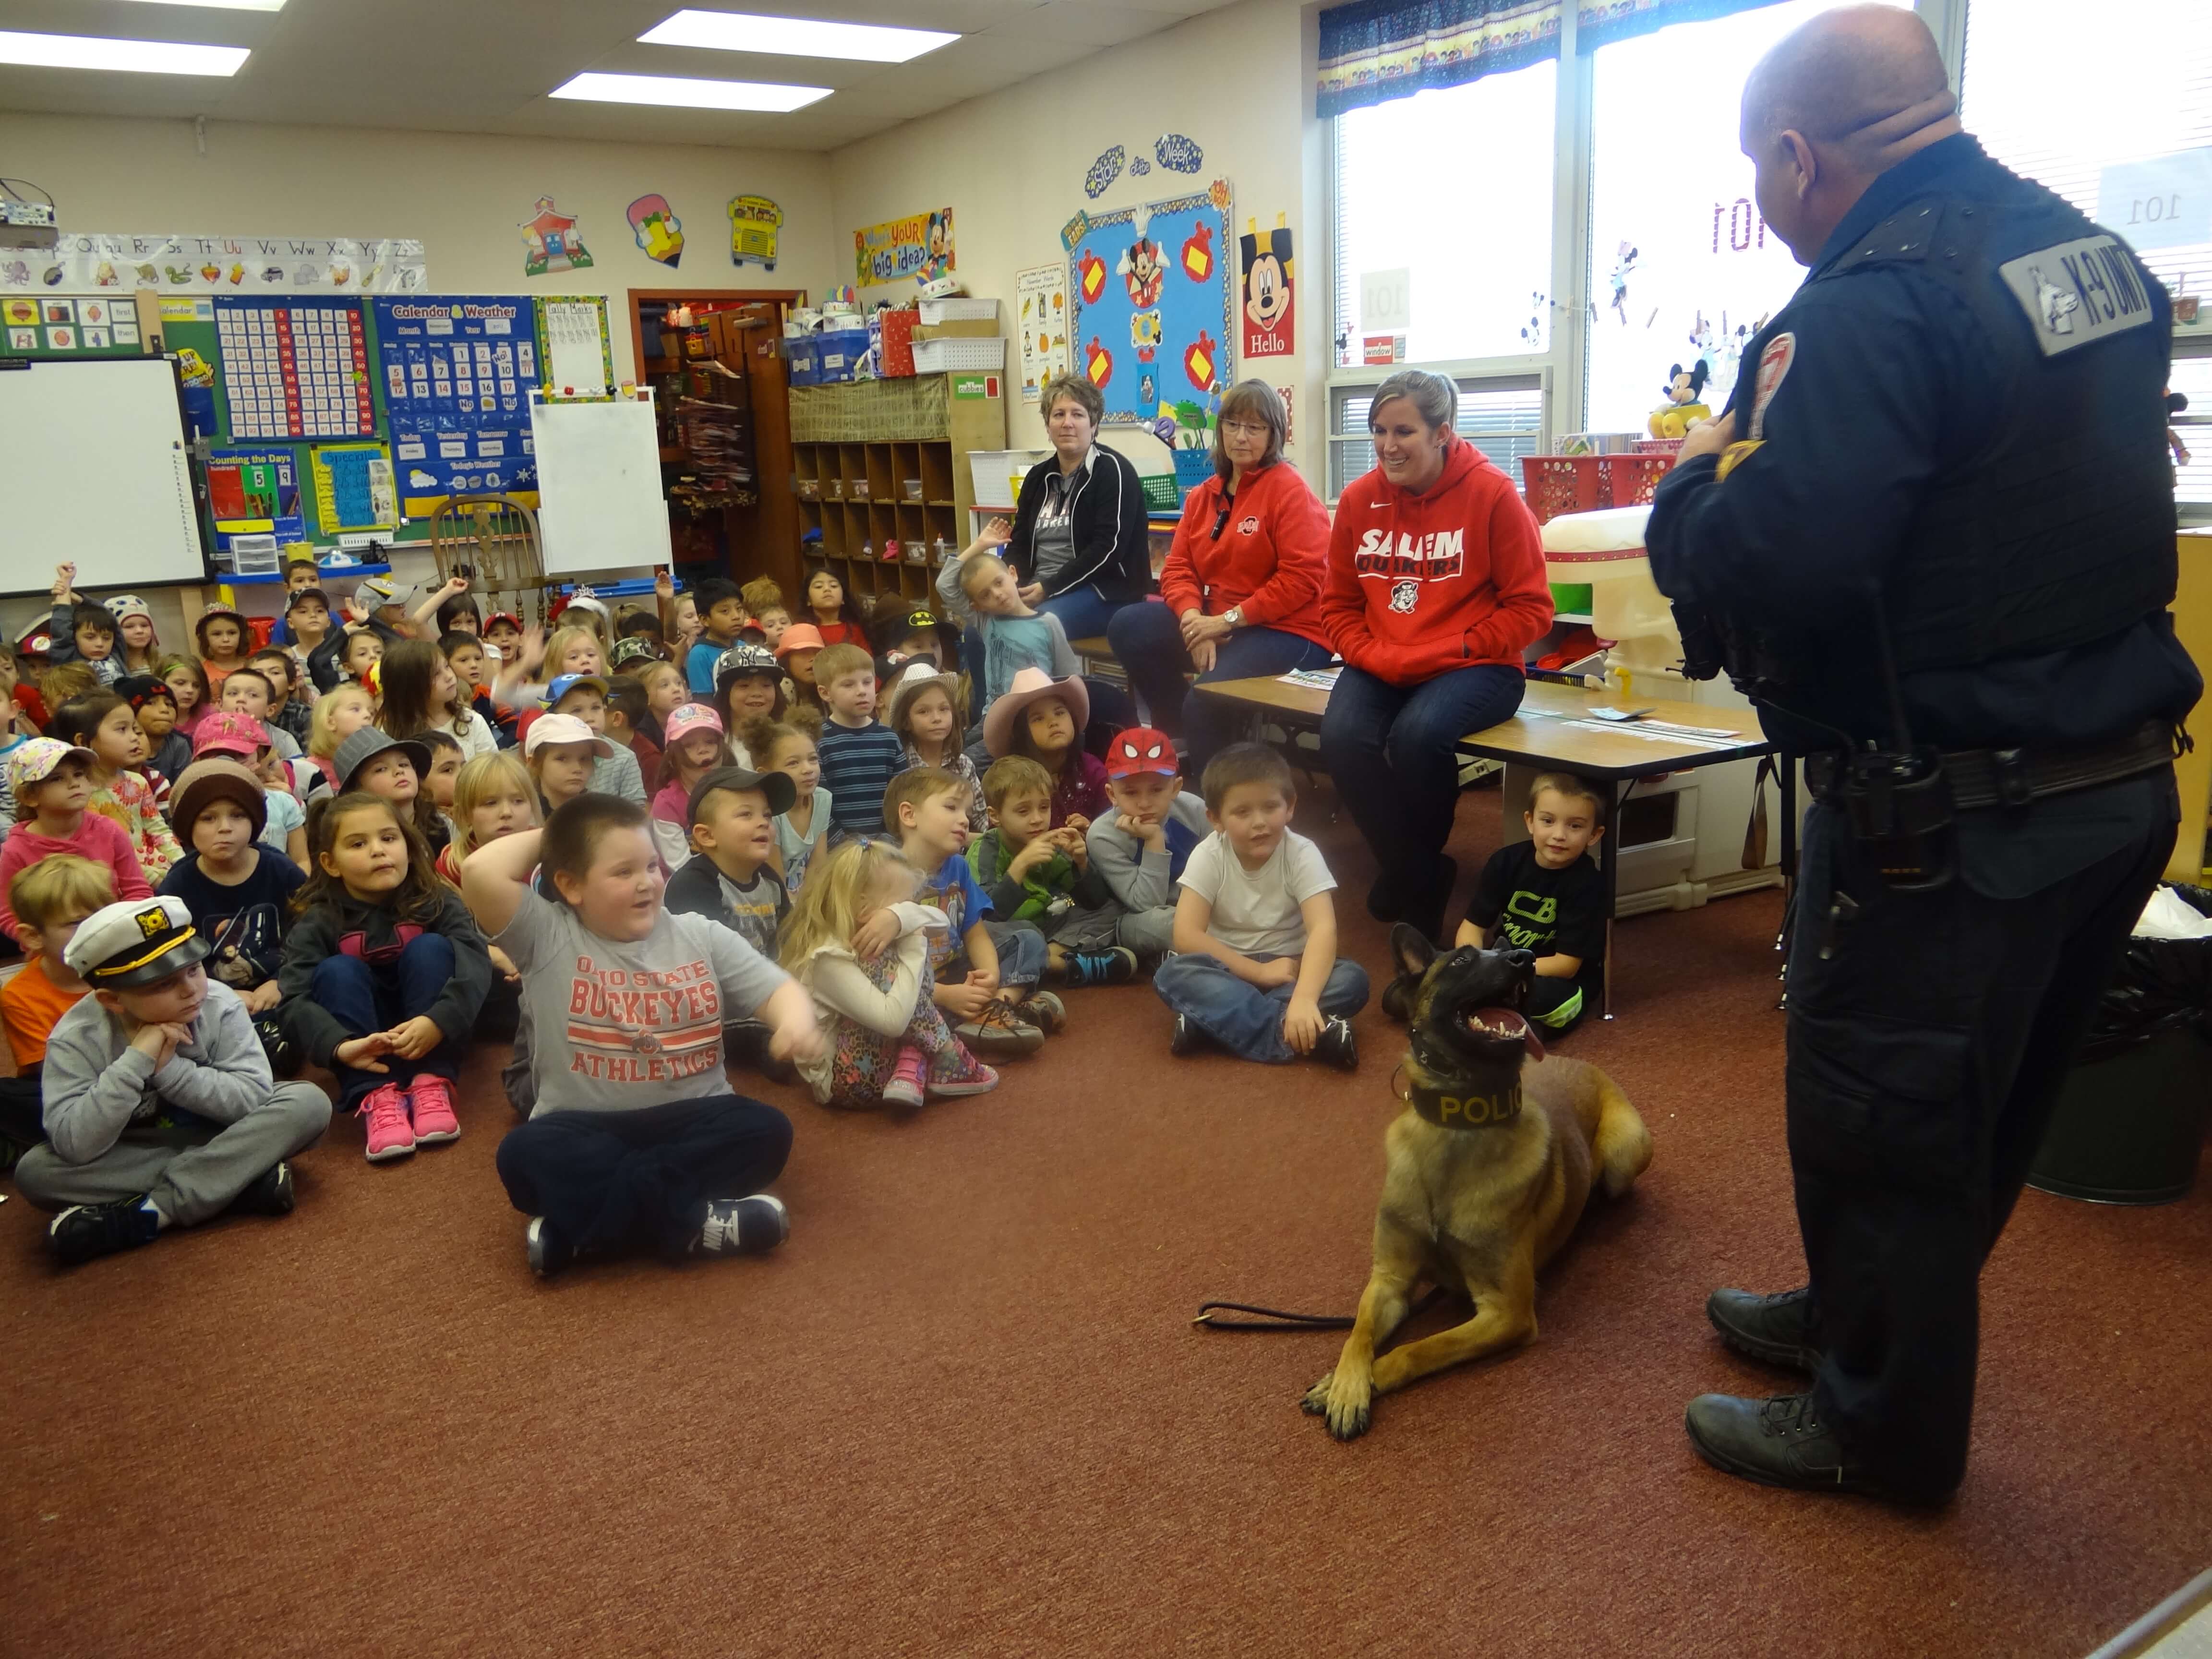 Salem Canine unit visiting Buckeye Elementary